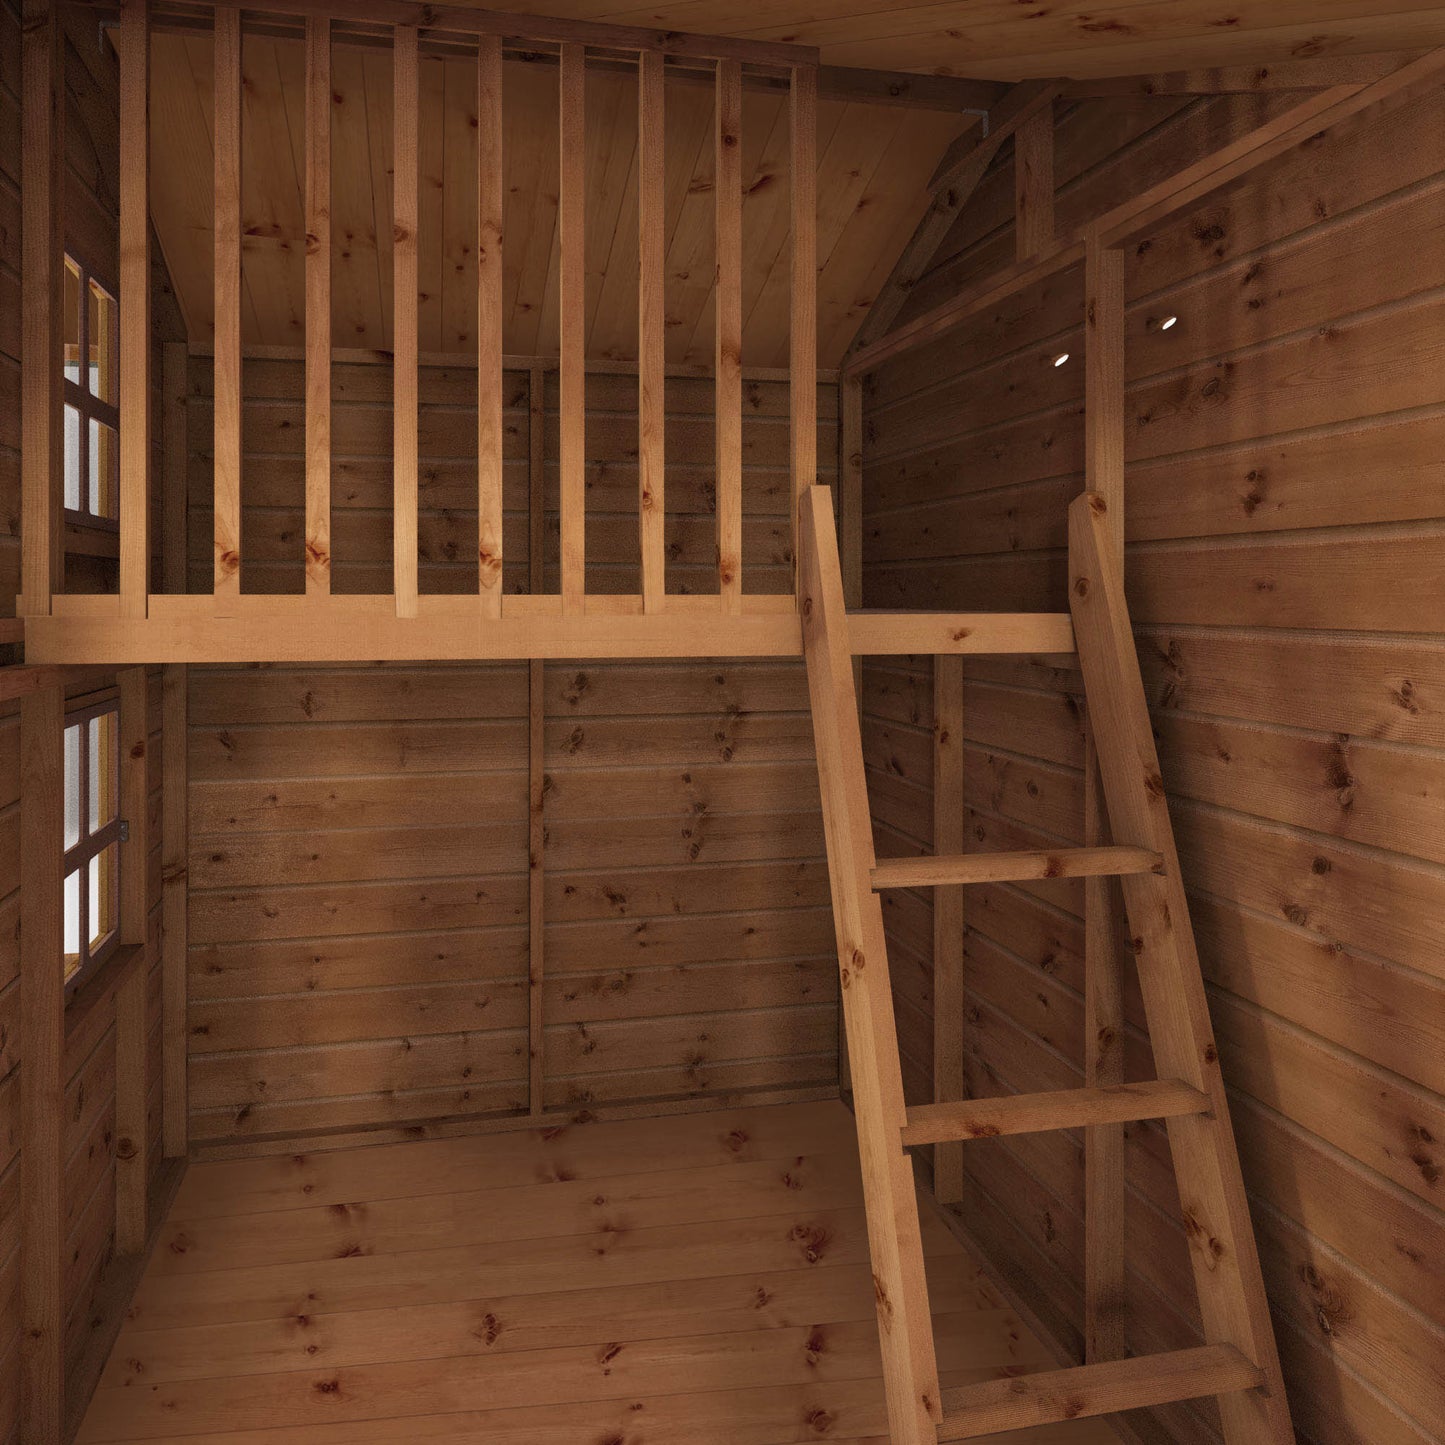 7 x 5 Snowdrop Wooden Playhouse with Loft